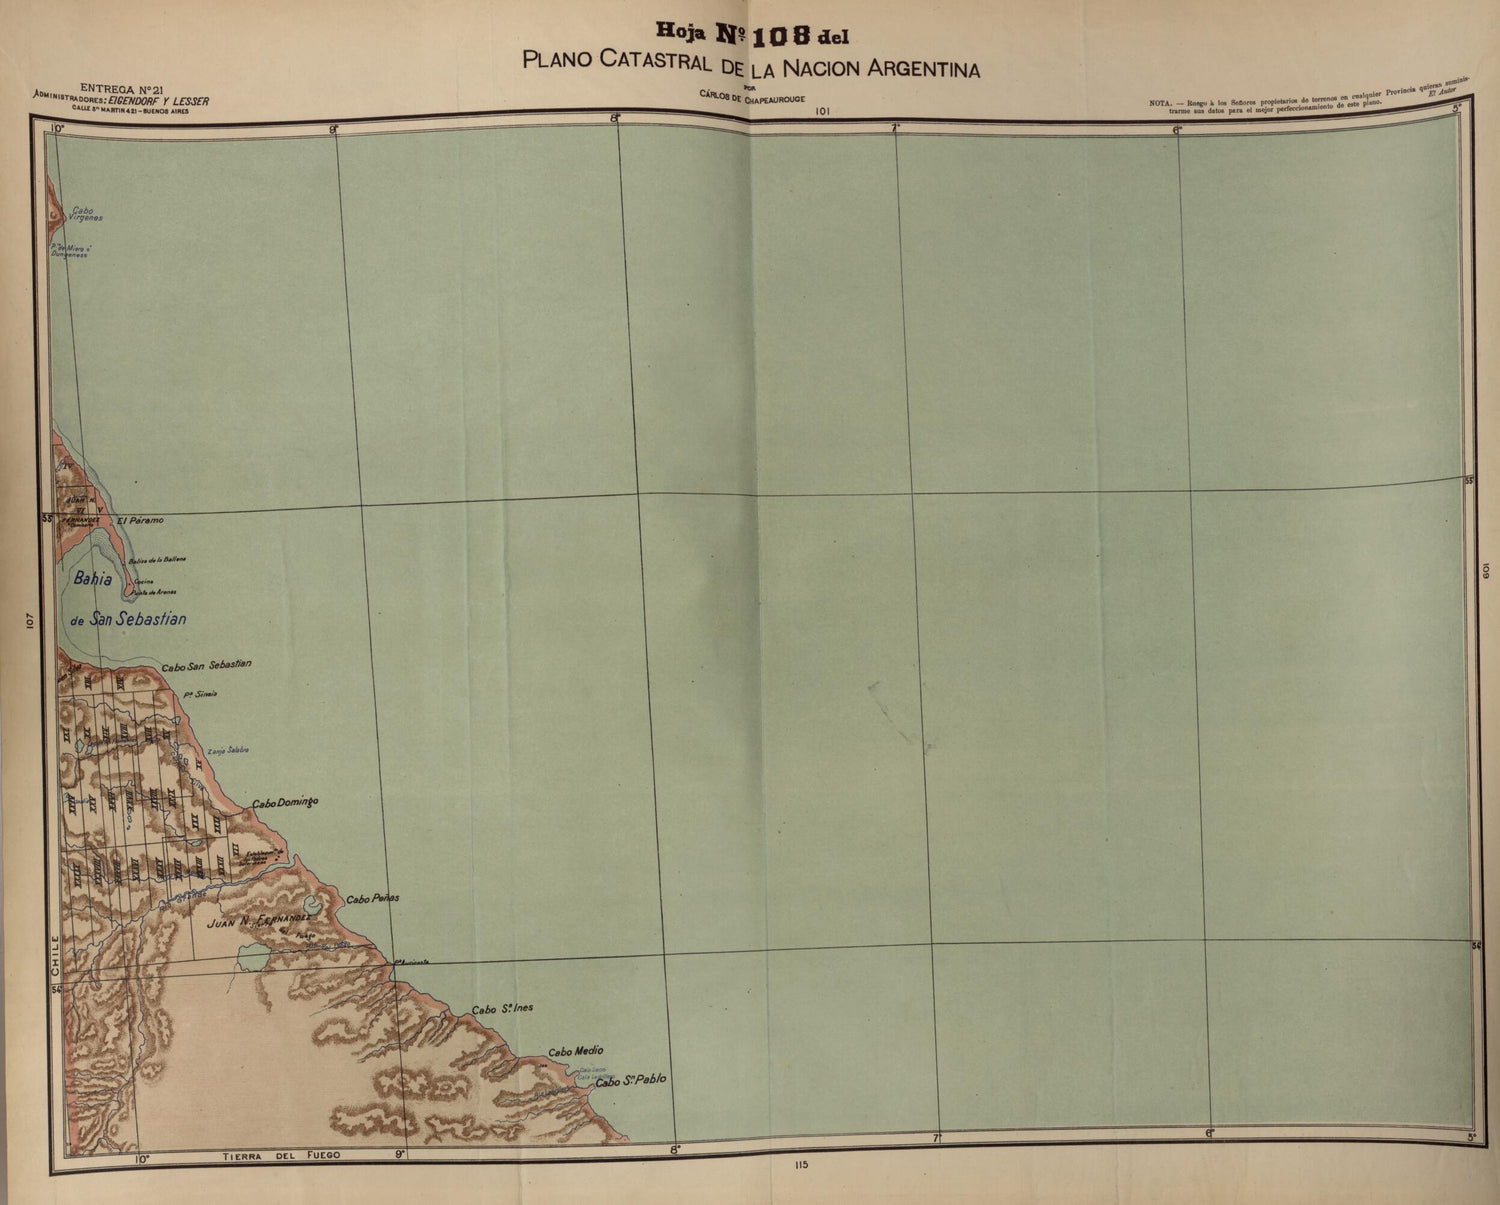 This old map of Plano Catastral De La Nacion Hoja No. 108 from República Argentina from 1905 was created by Carlos De Chapeaurouge in 1905